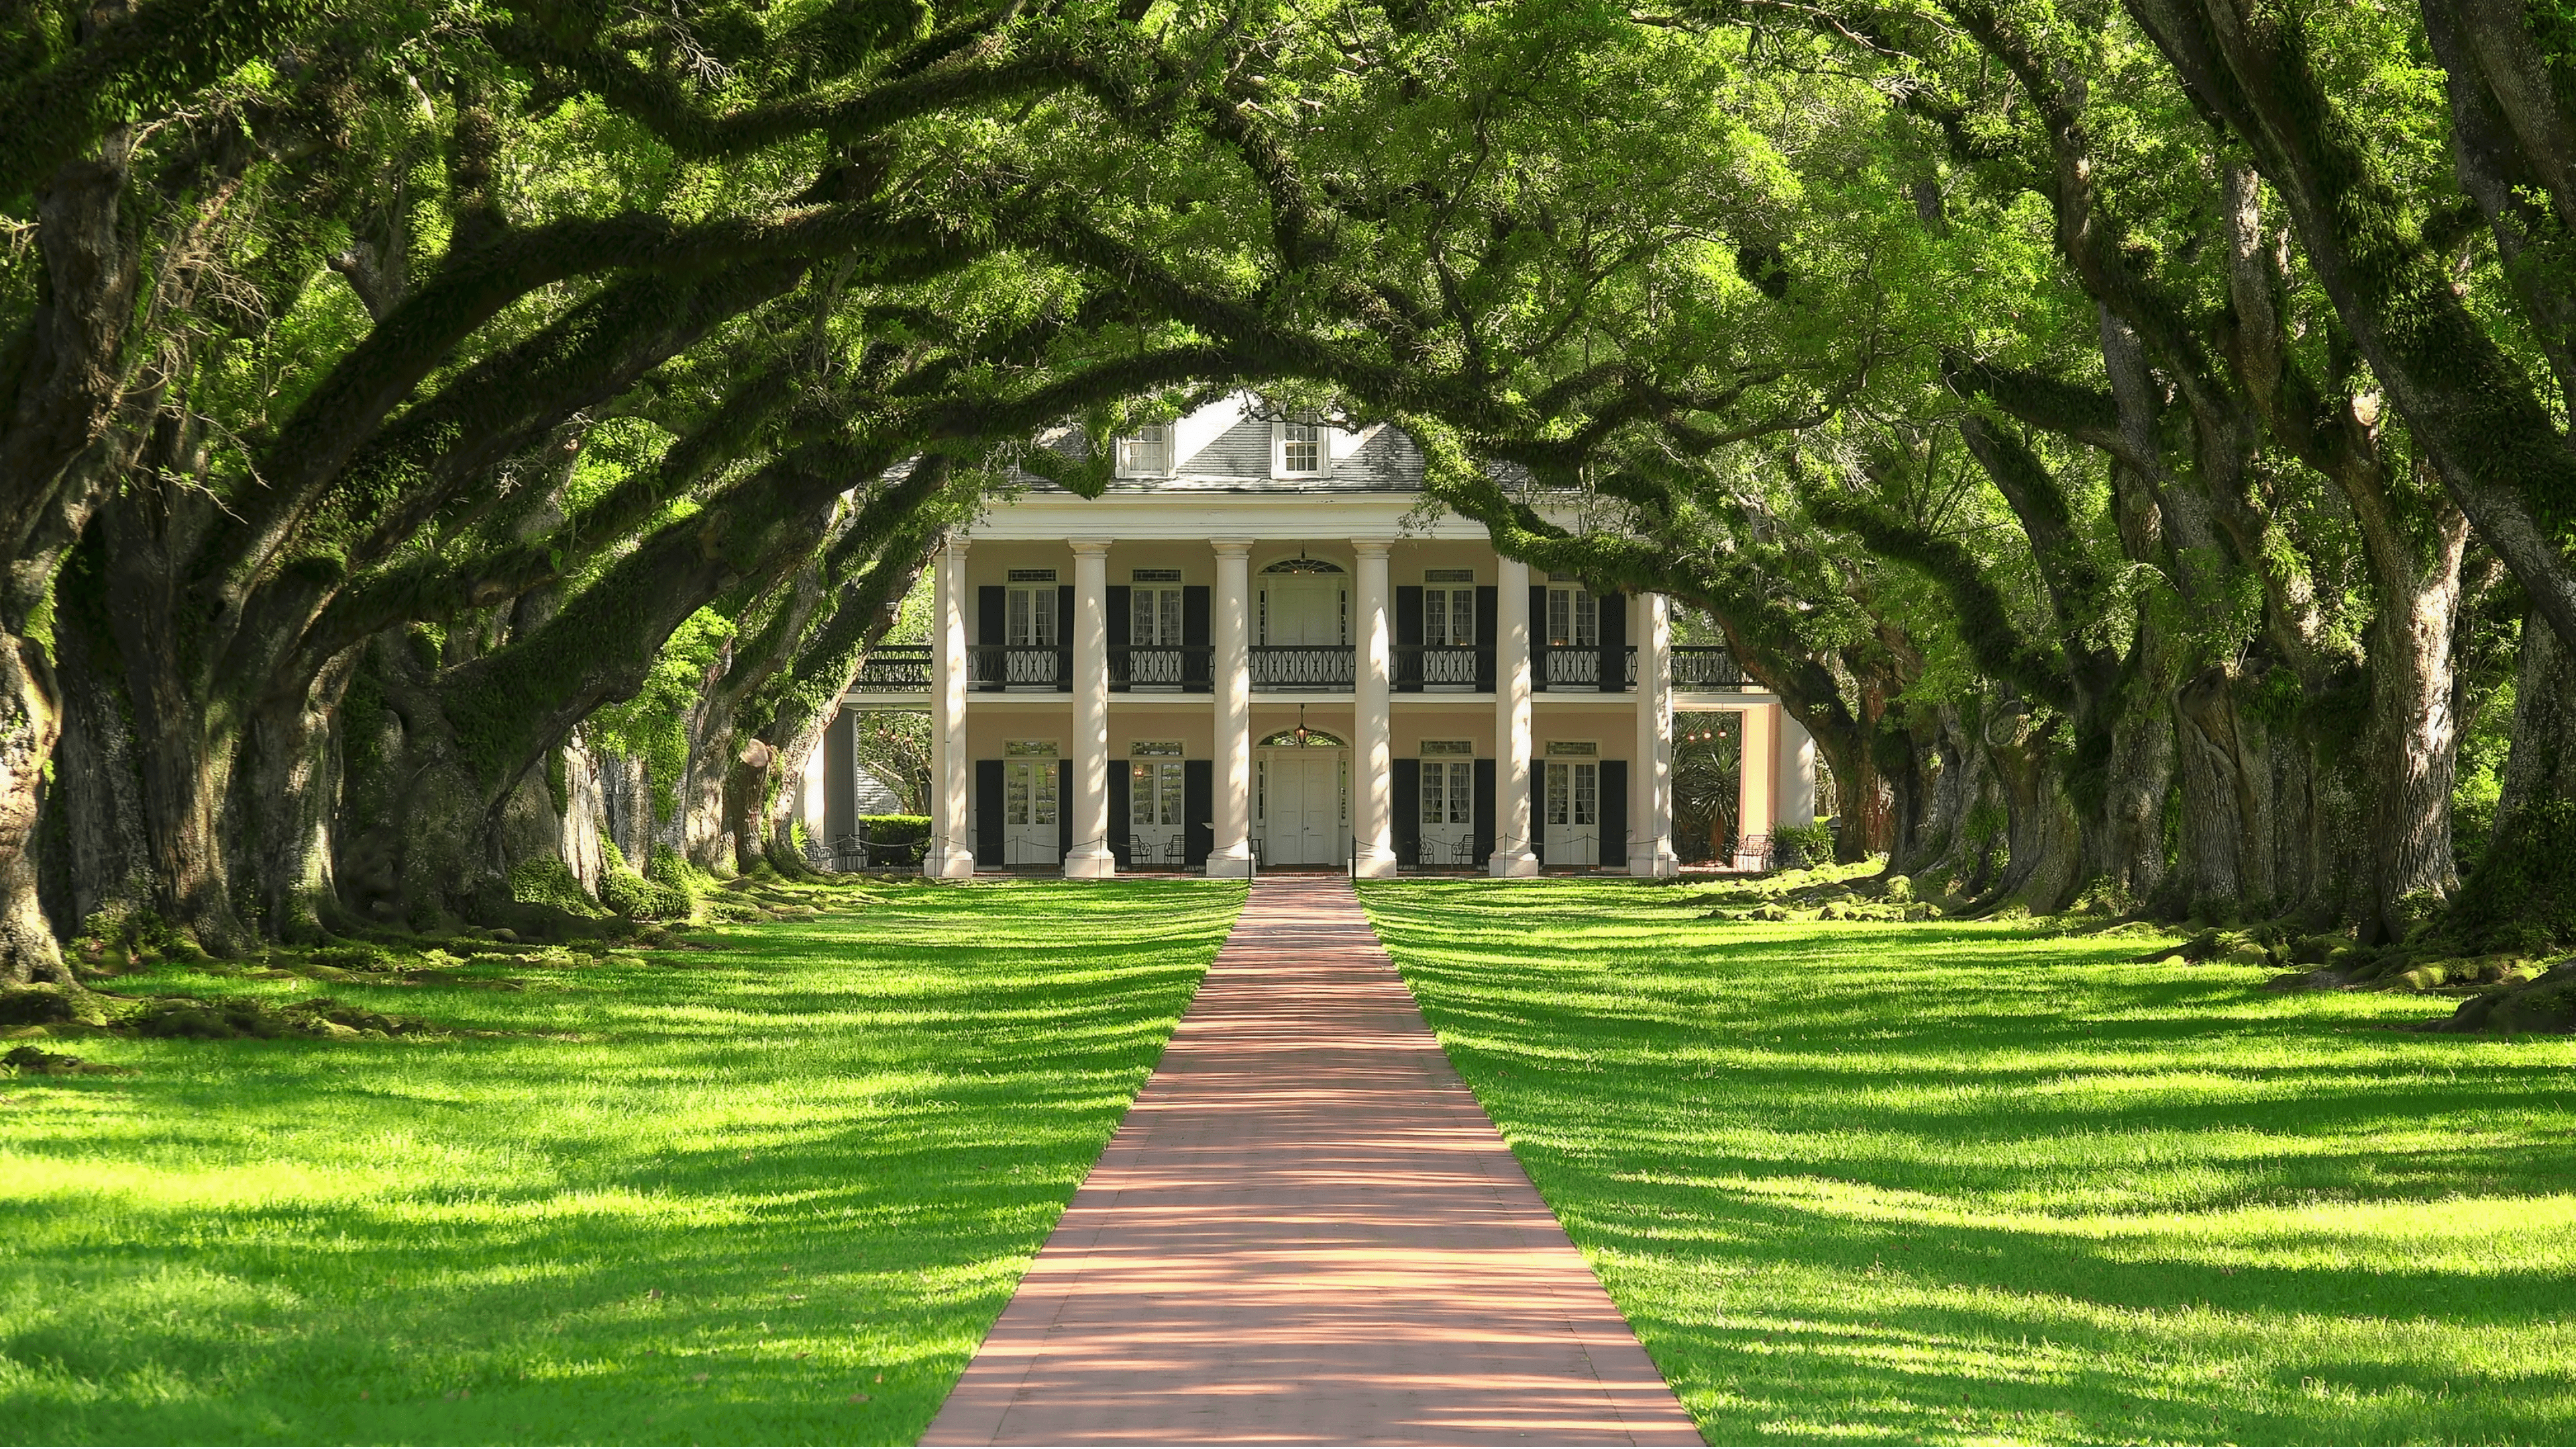 Louisiana home with oak trees over walkway